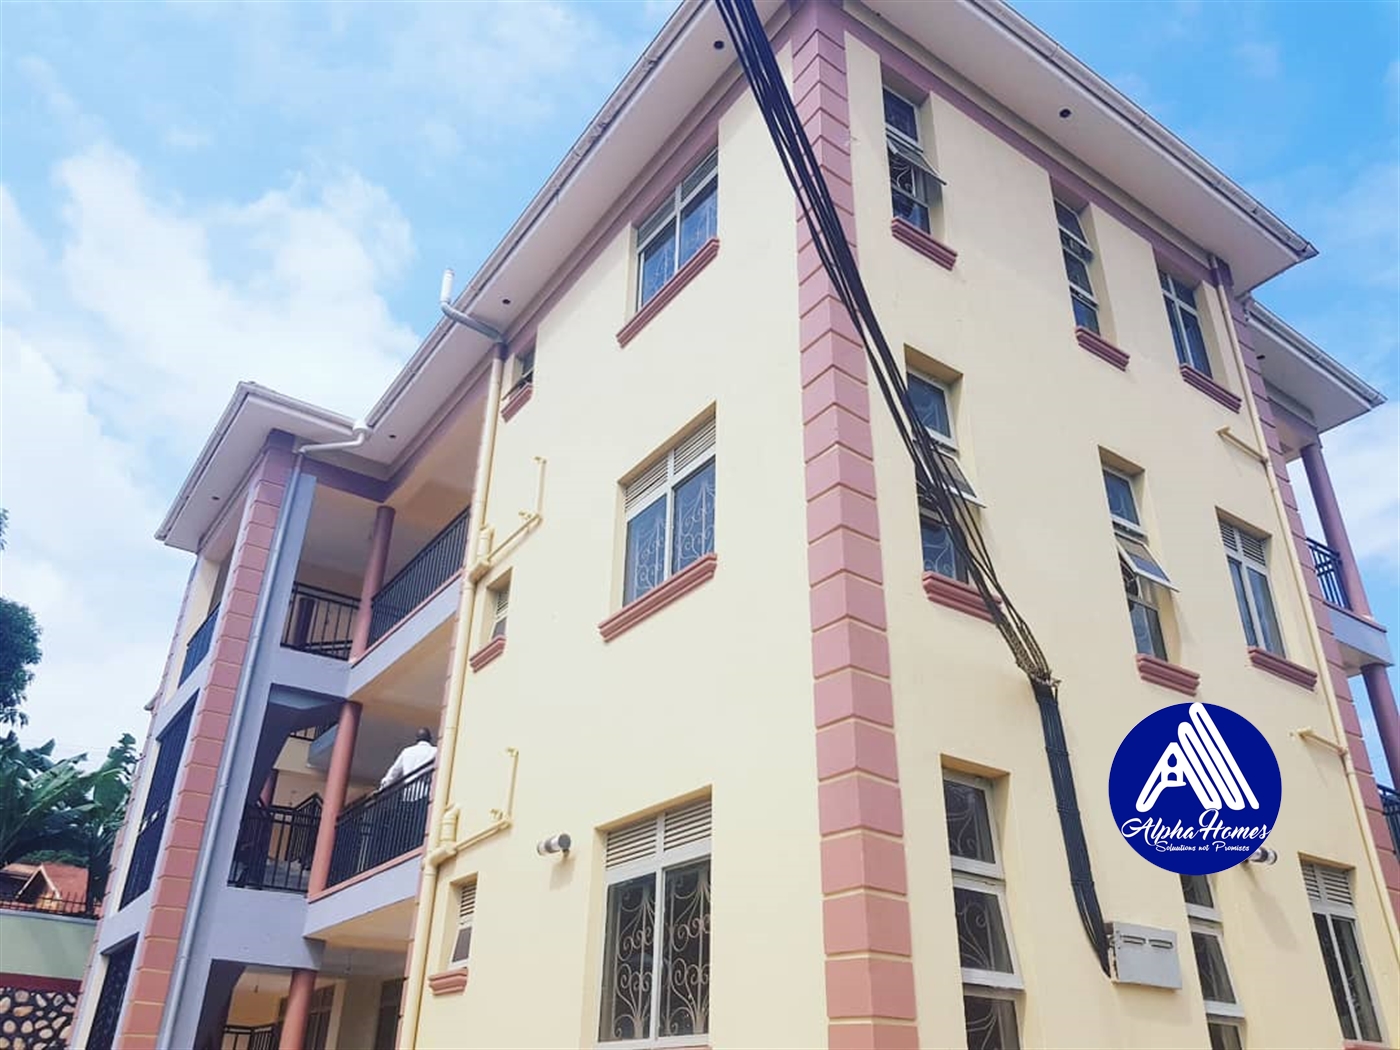 Apartment for rent in Kigo Kampala